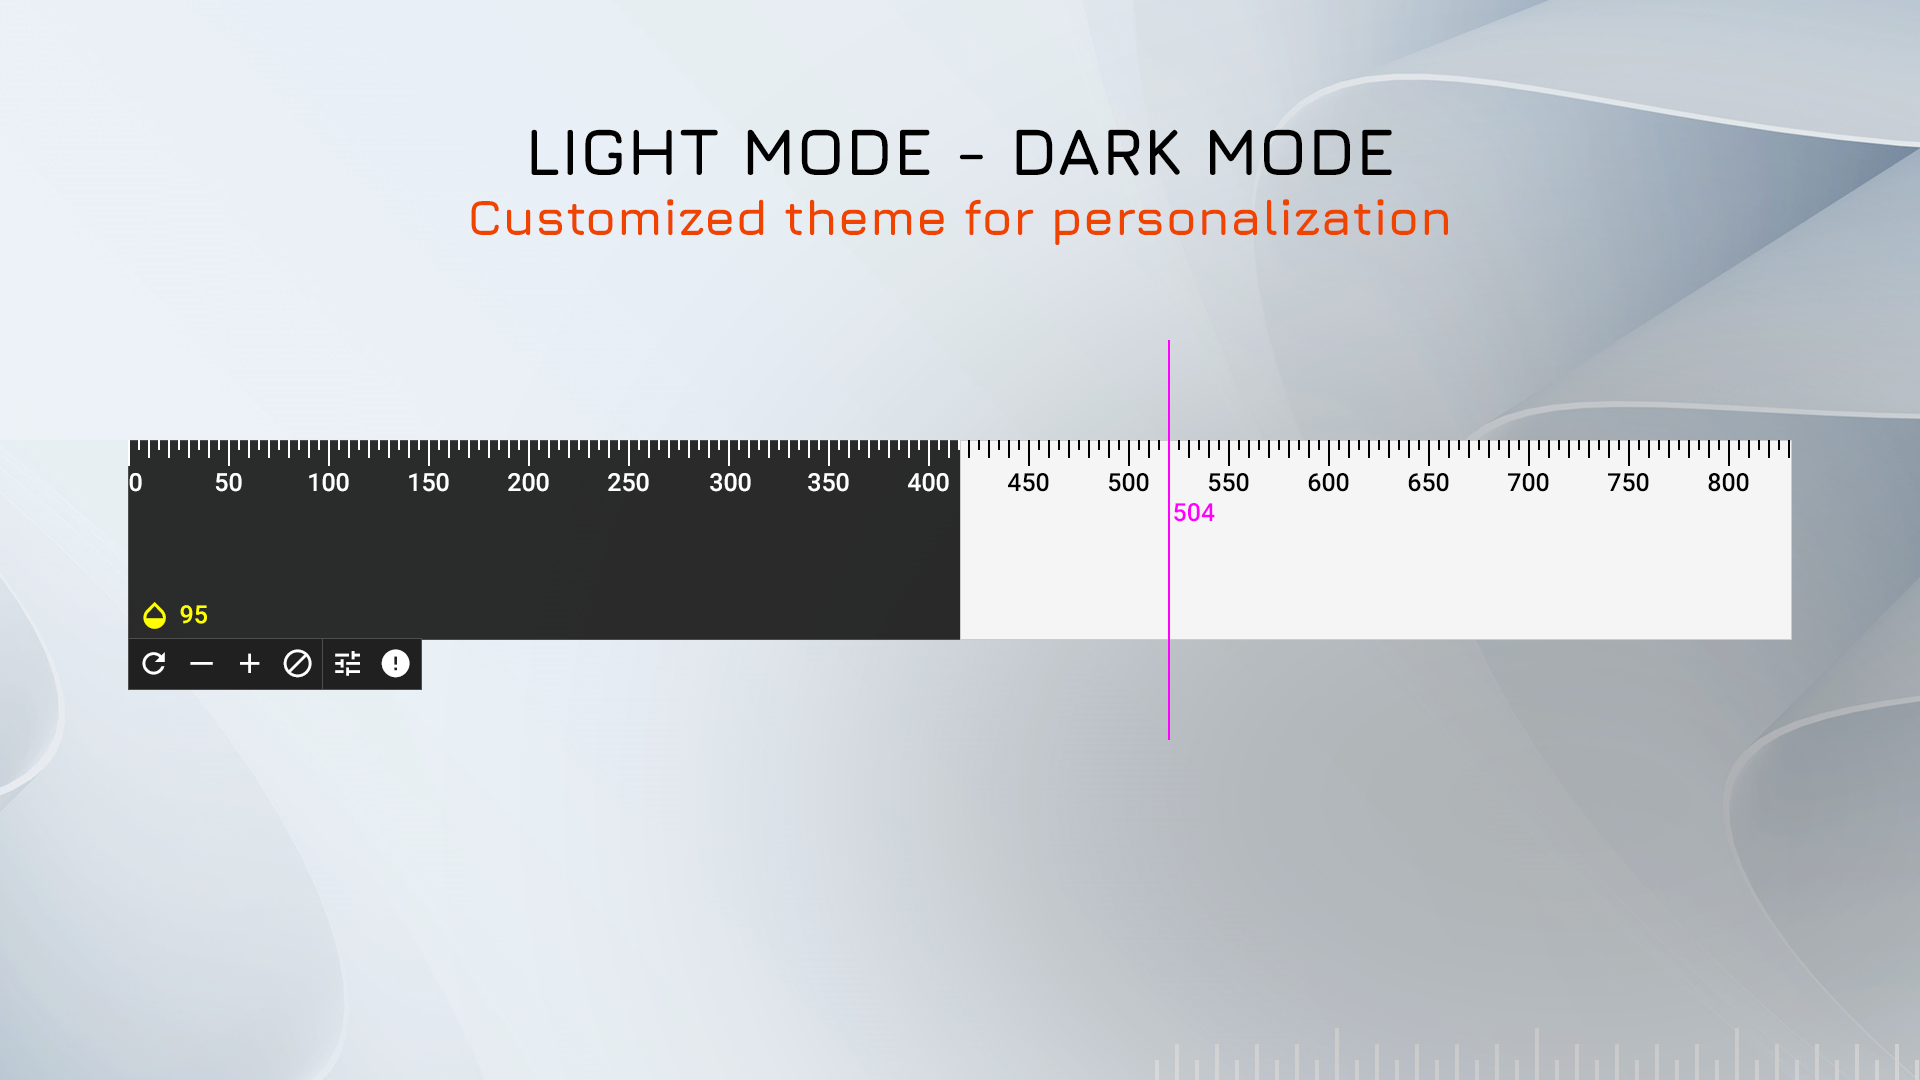 Light Mode - Dark Mode - Customized theme for personalization.